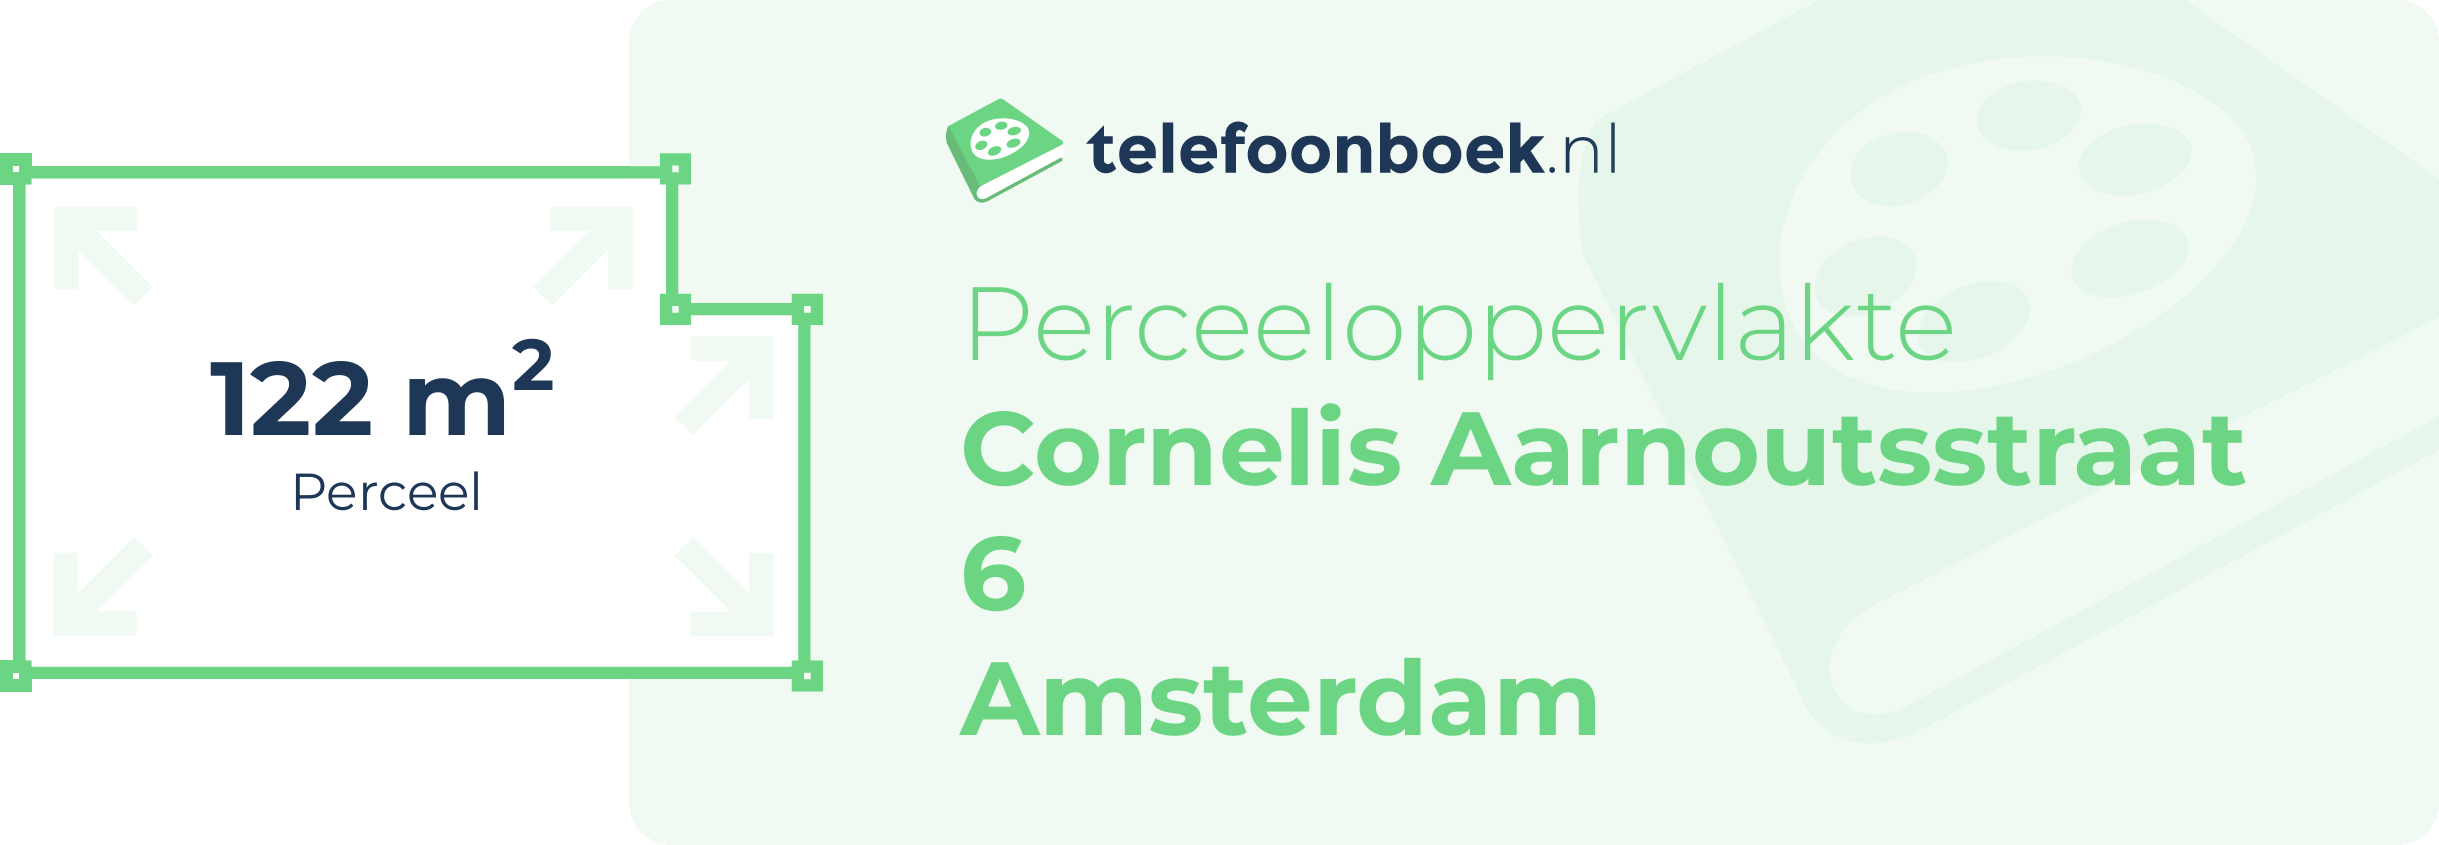 Perceeloppervlakte Cornelis Aarnoutsstraat 6 Amsterdam